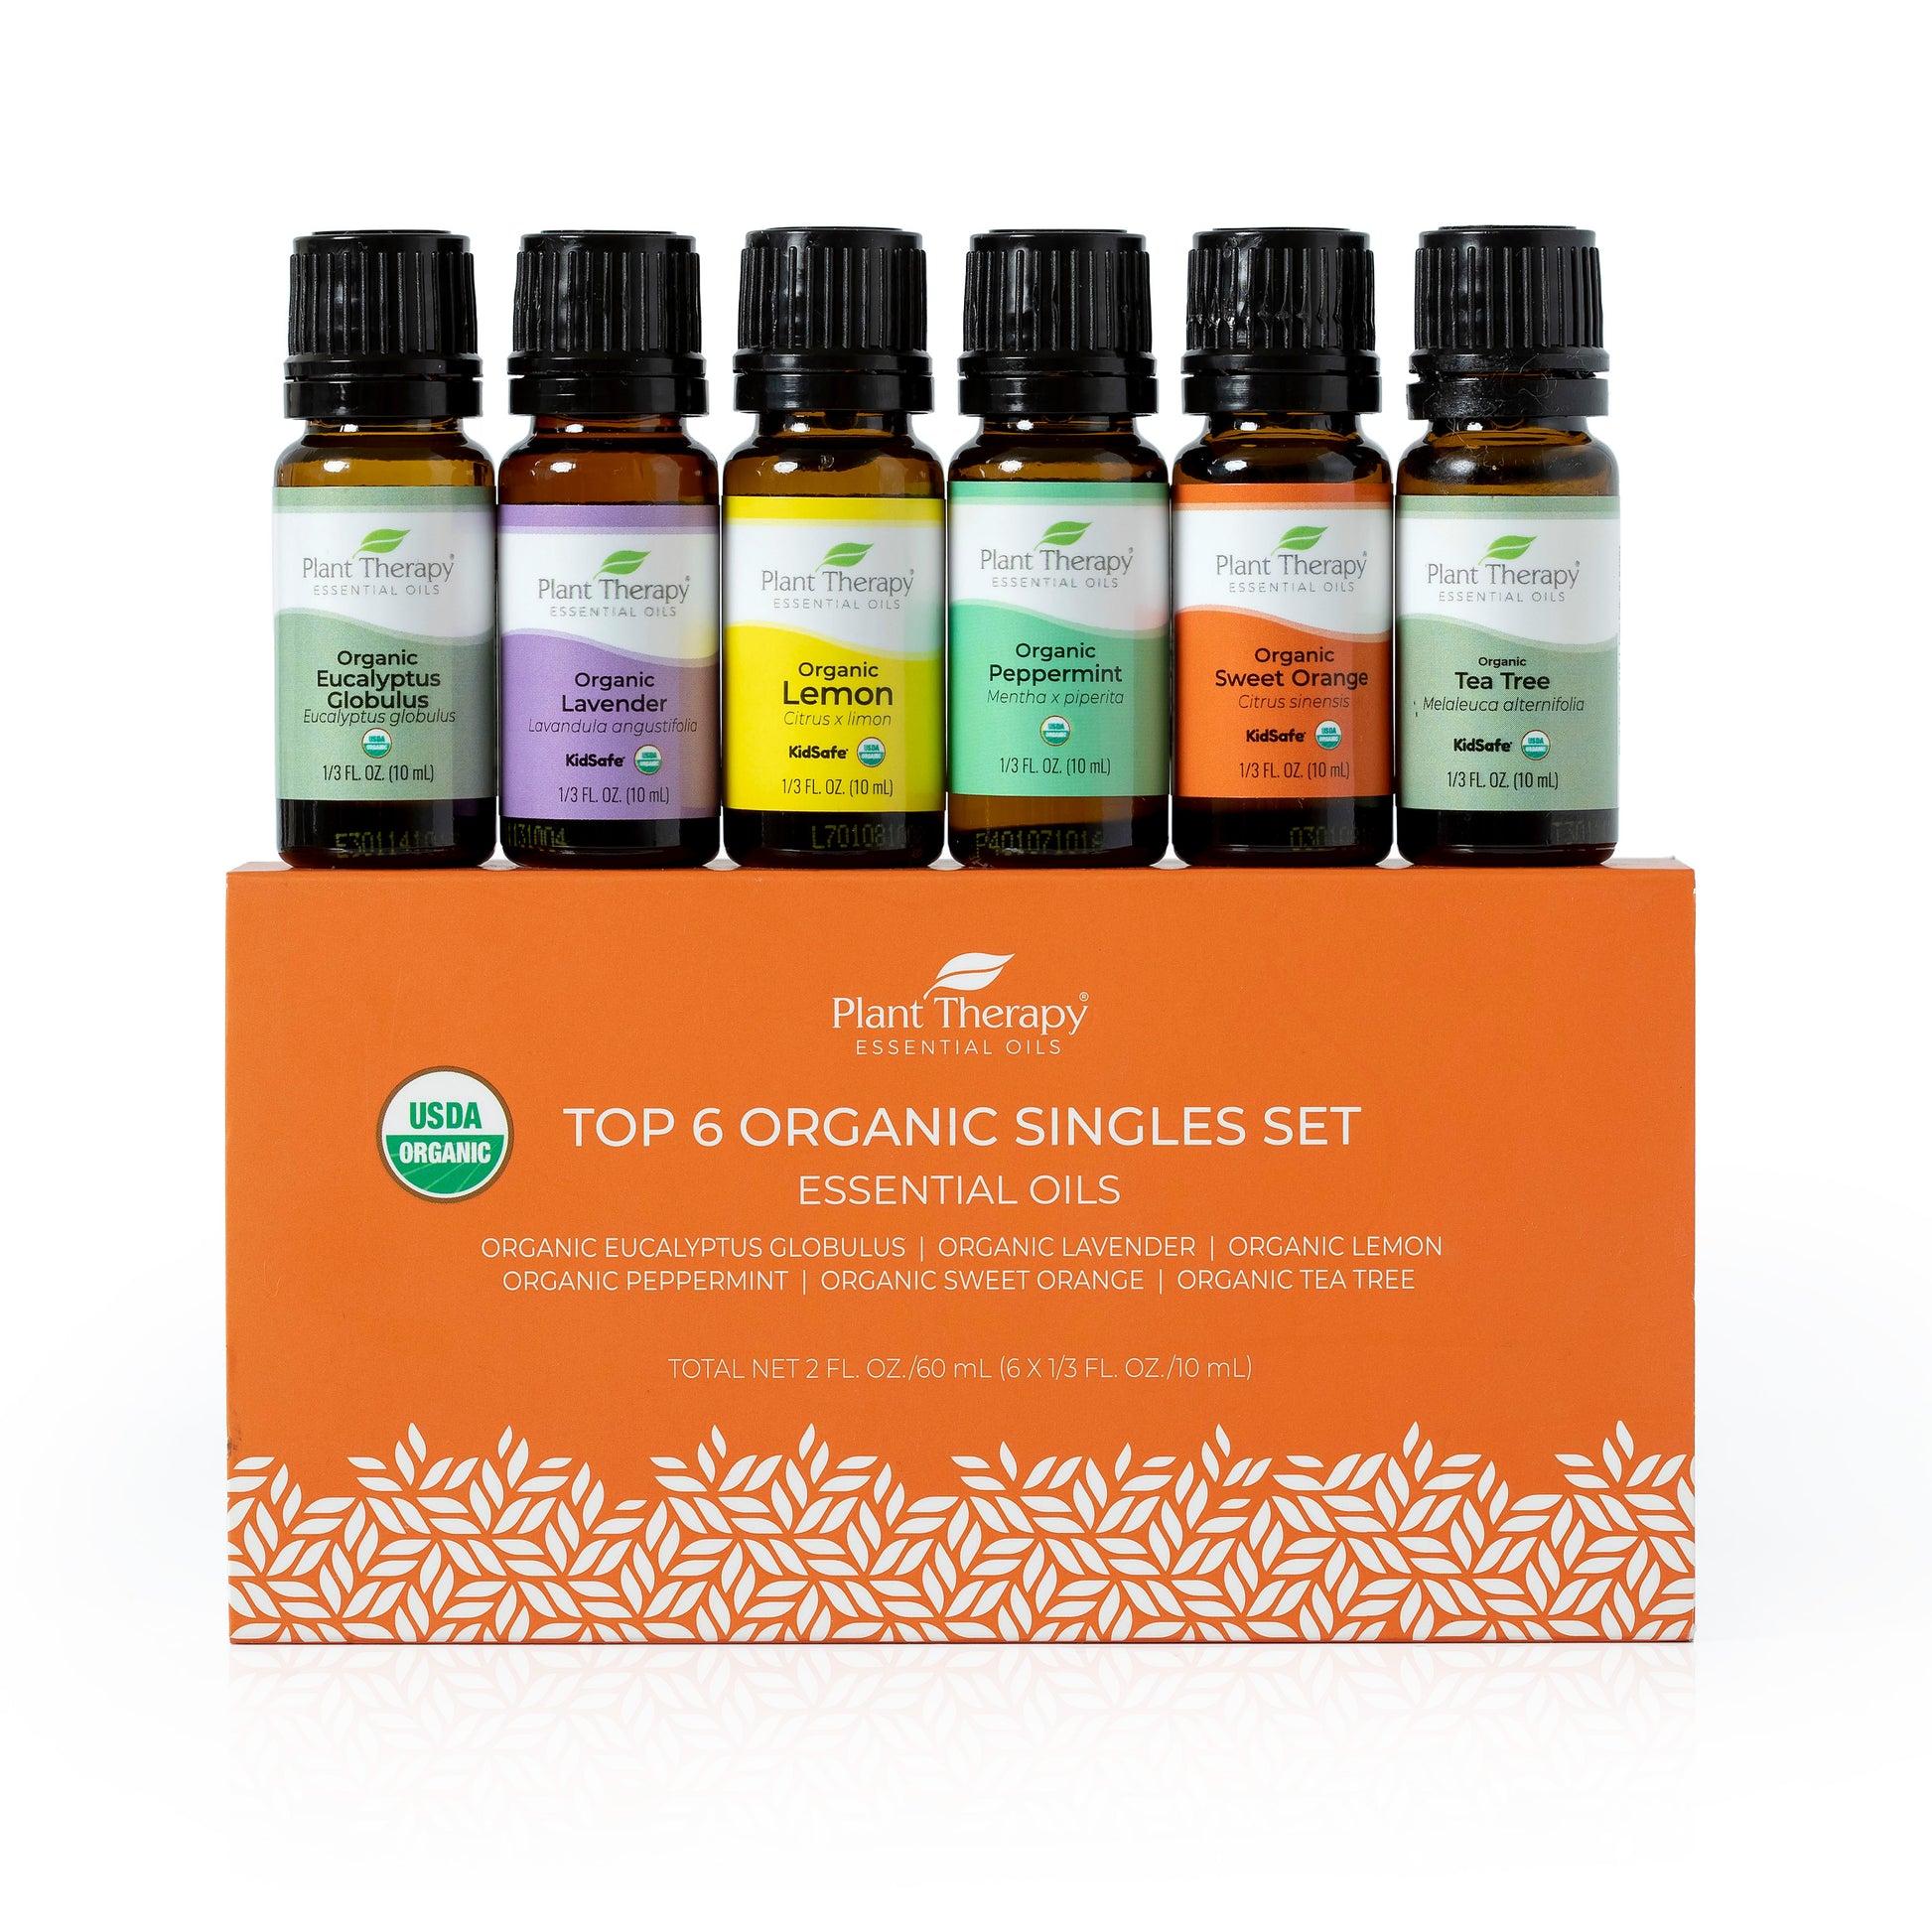 100% Organic Floral Aroma Therapy Oils Set (6) – MindBreaker